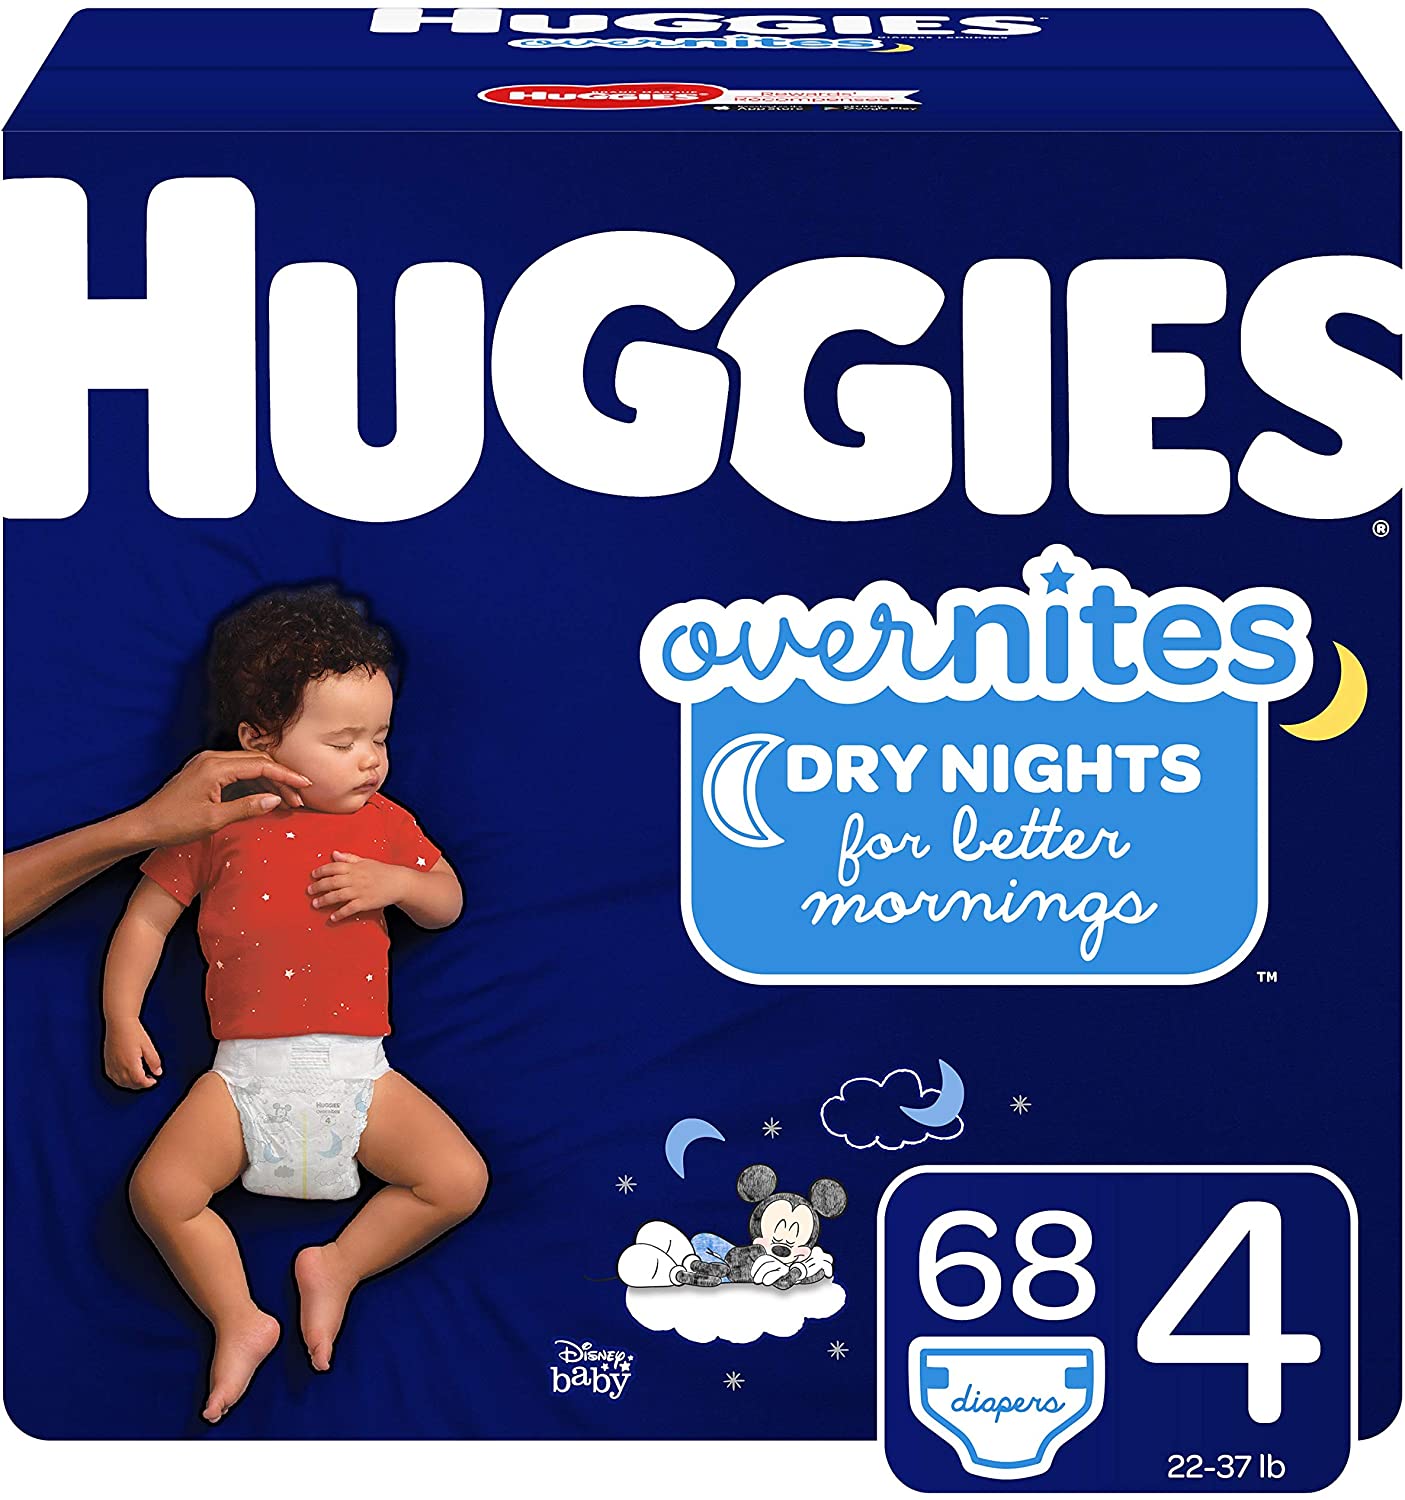 Huggies Overnites Nighttime Diapers